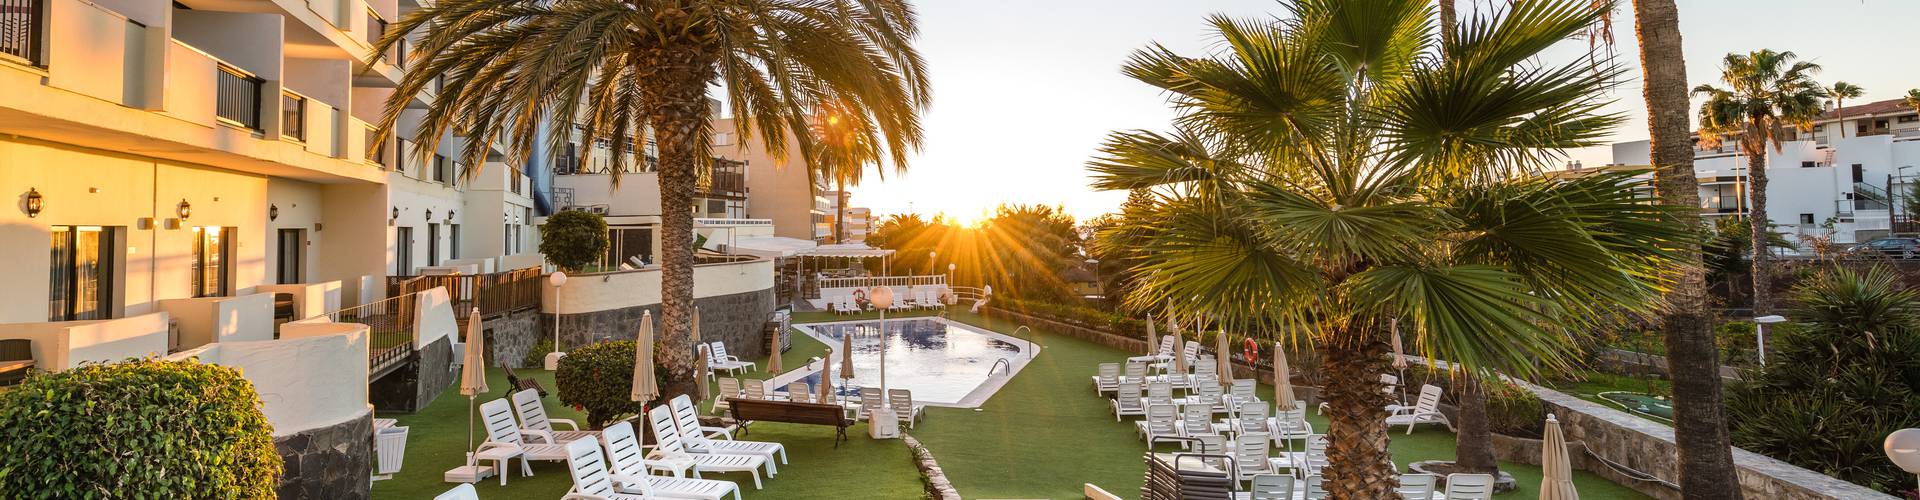 Hotel New Folias - Gran Canaria - 